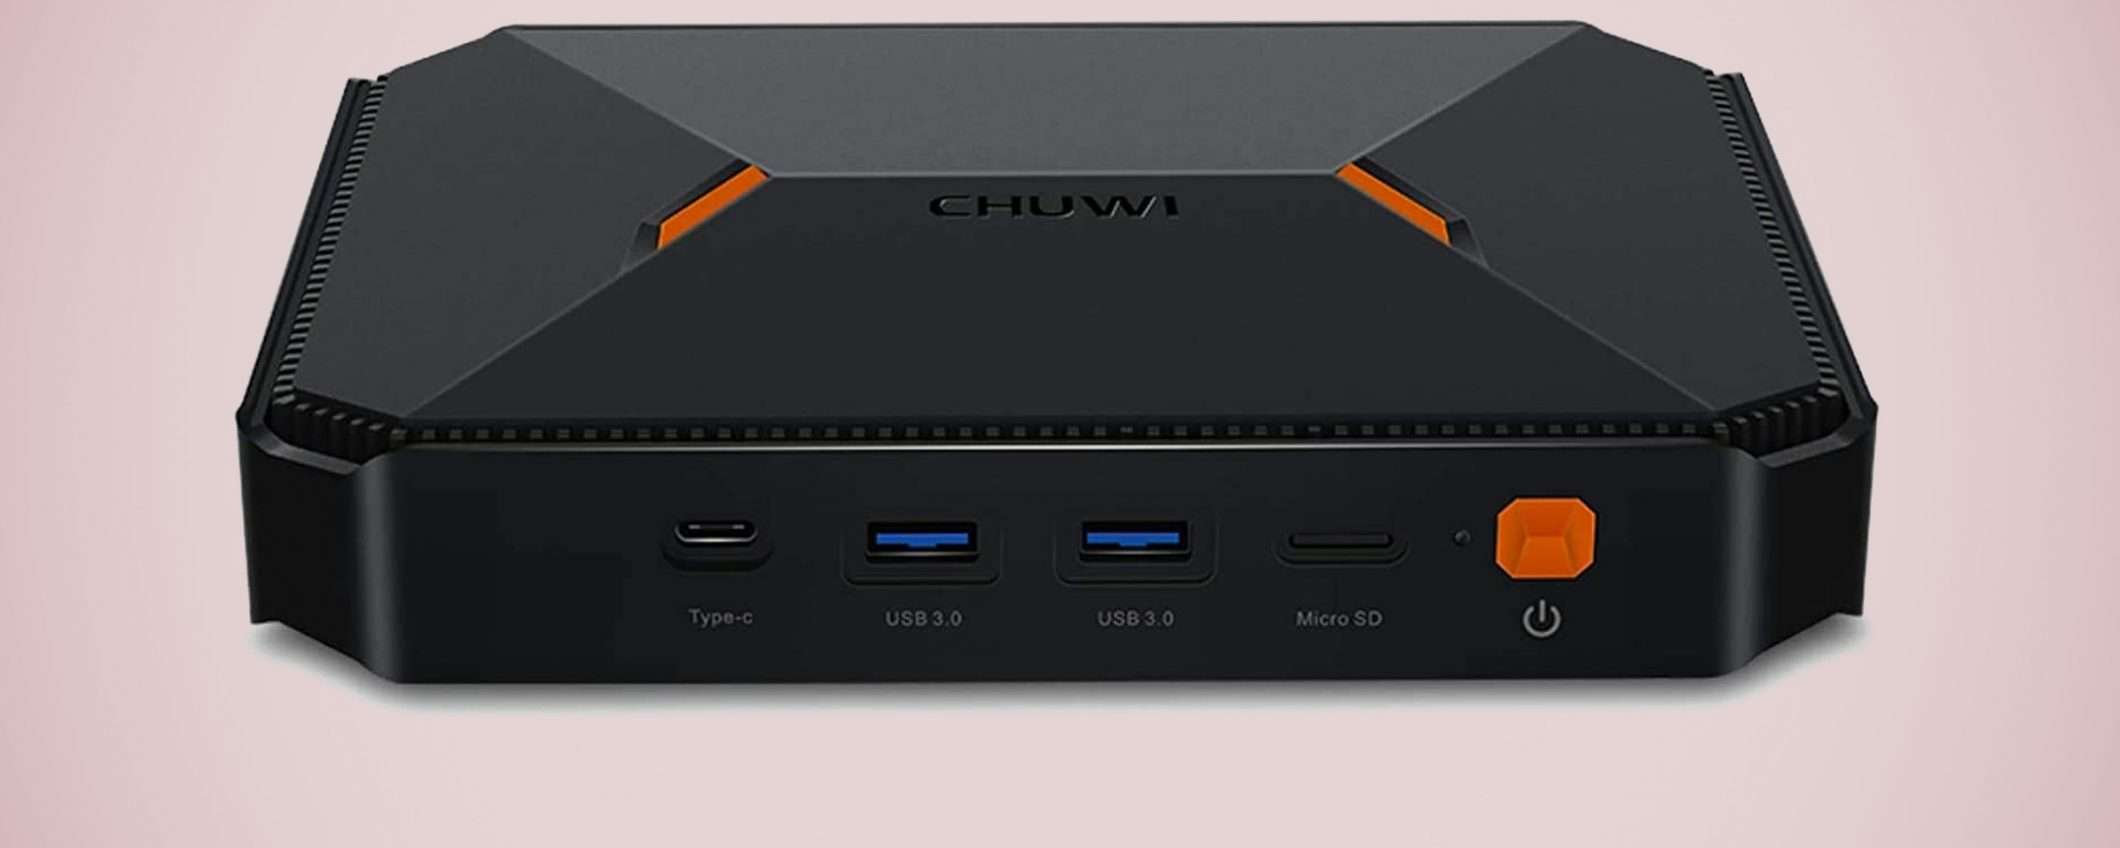 Chuwi HeroBox, Mini PC in offerta lampo su Amazon